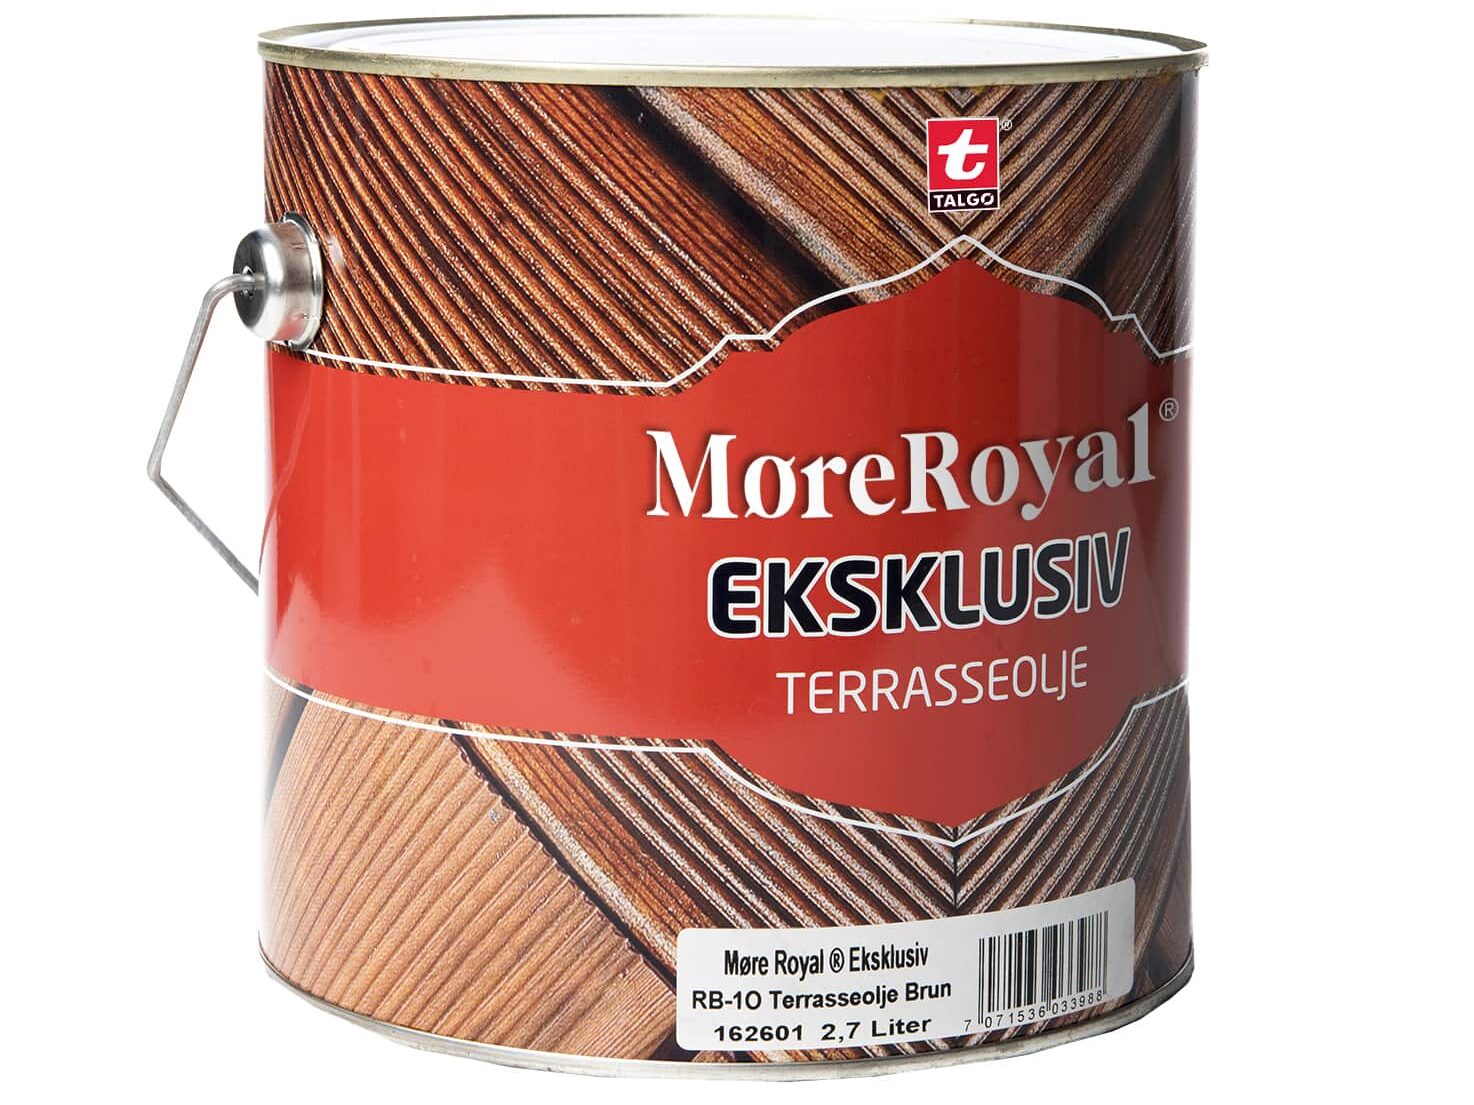 MøreRoyal Eksklusiv Terrasseolje